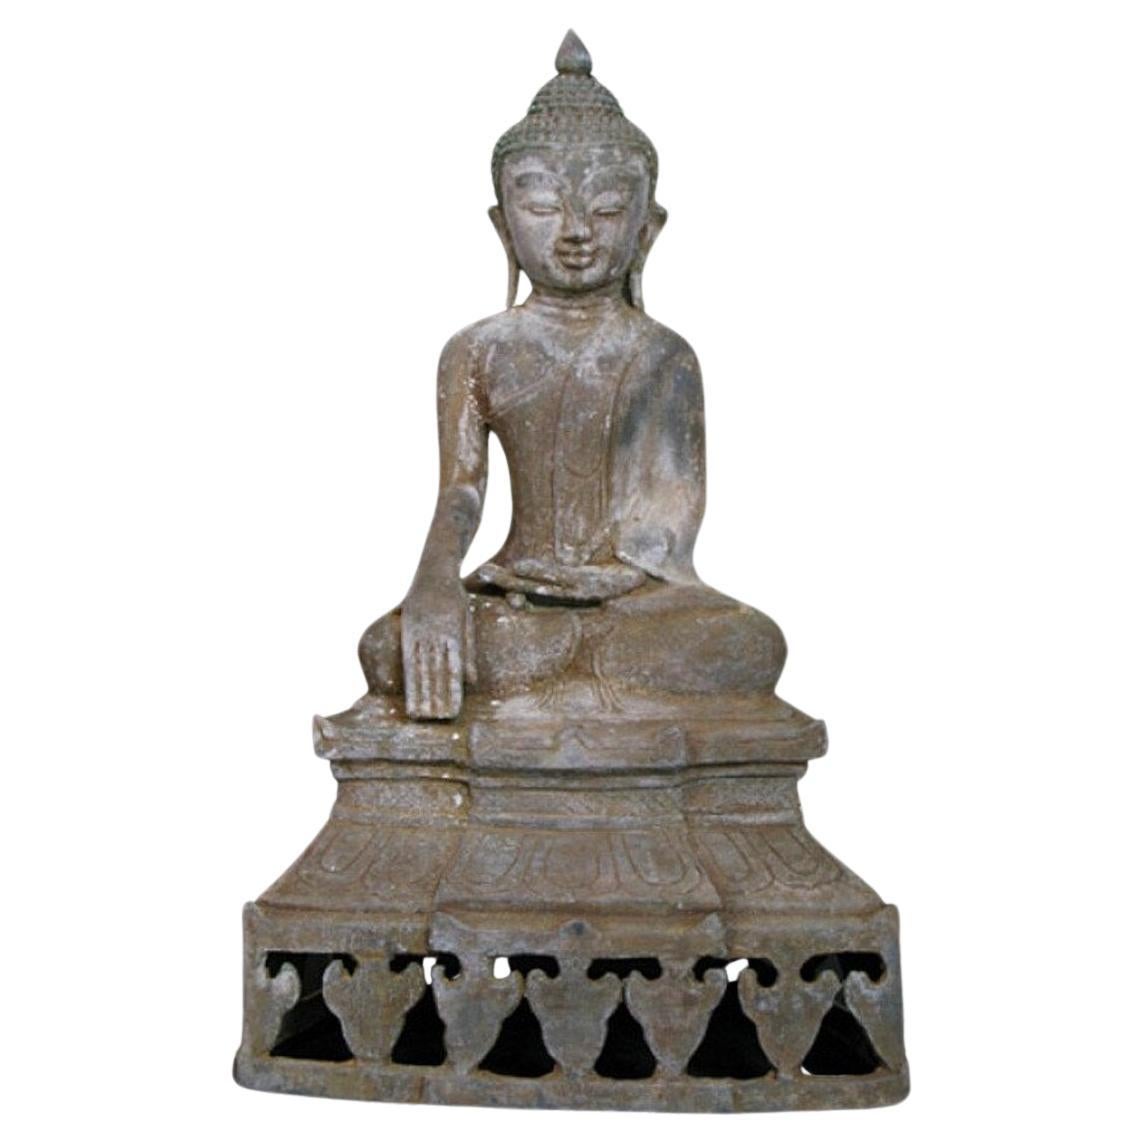 Old Bronze Seated Buddha Statue from Burma